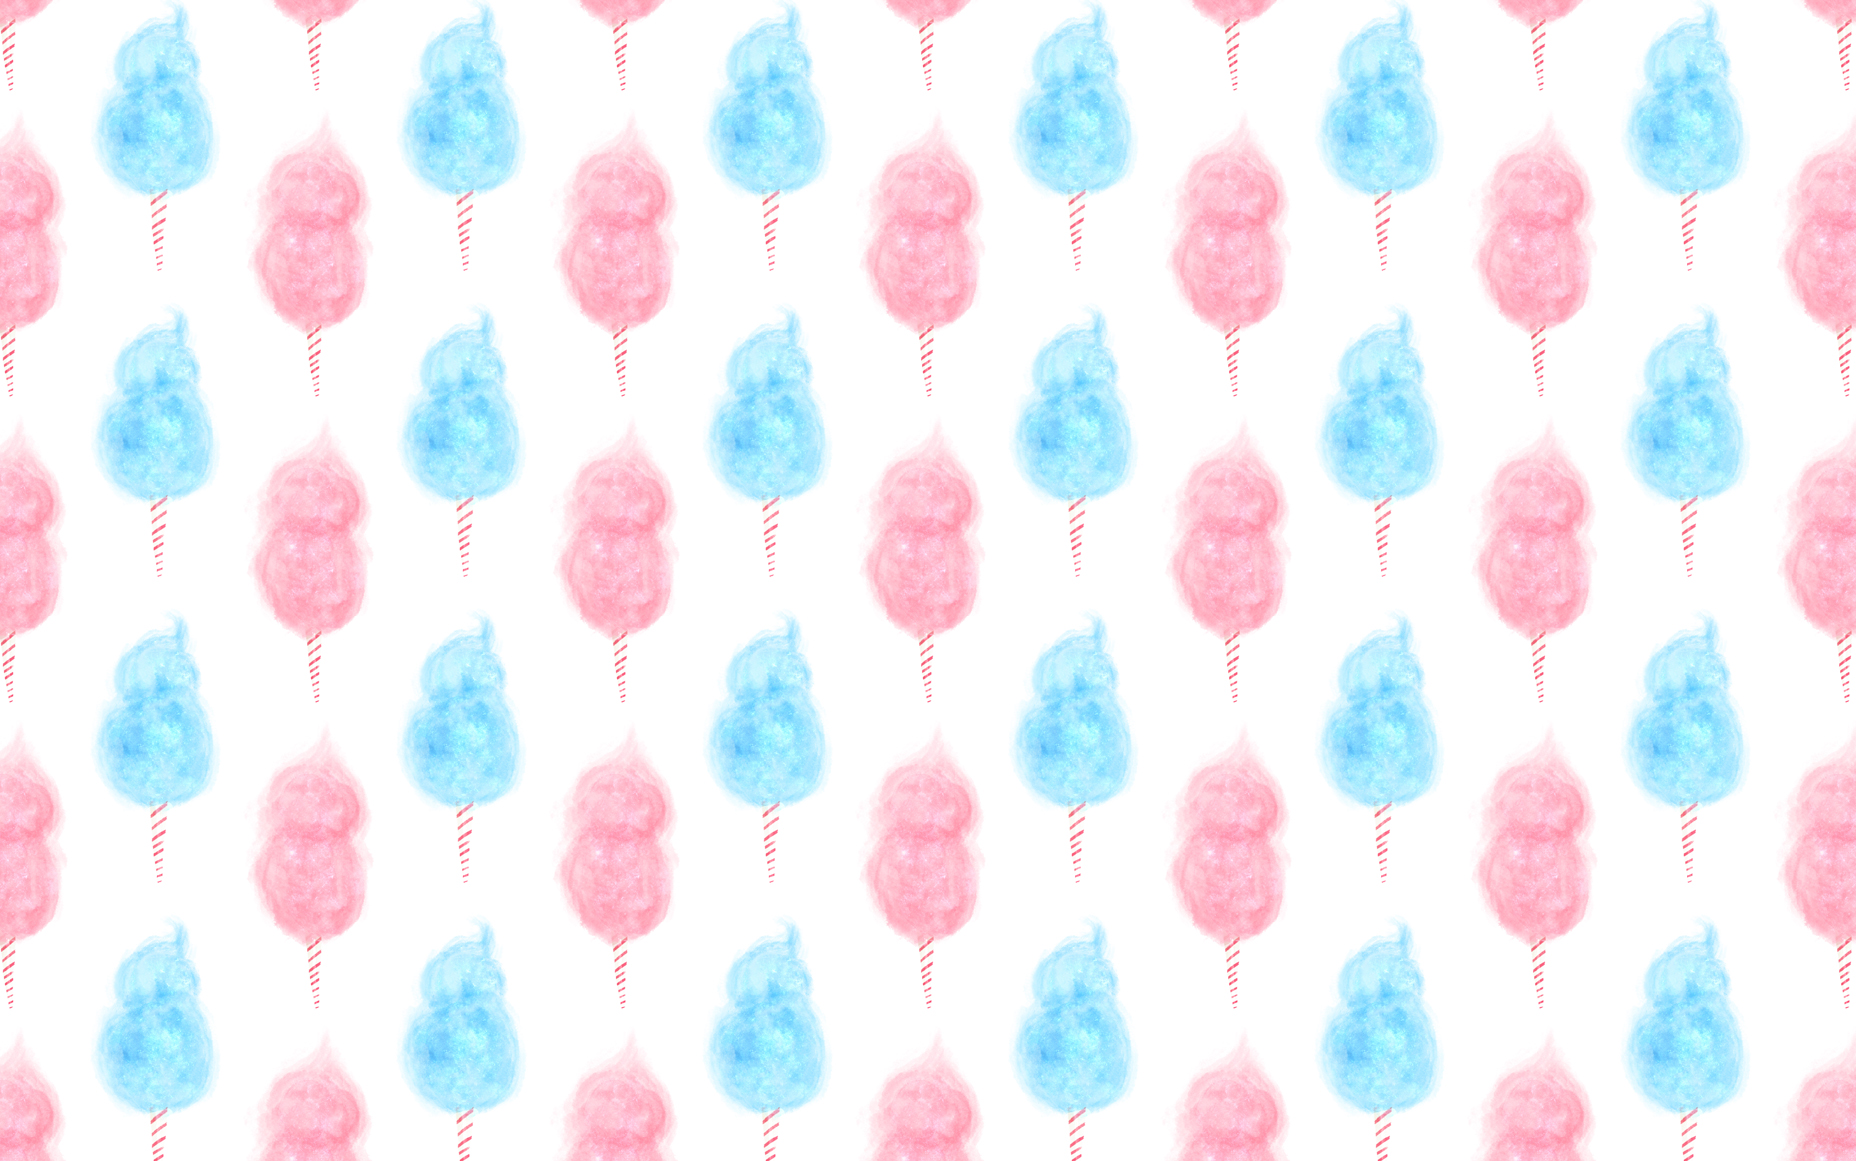 Cotton Candy Wallpaper, 44 Cotton Candy 2016 Wallpaper - Cute Pastel Desktop Backgrounds - HD Wallpaper 